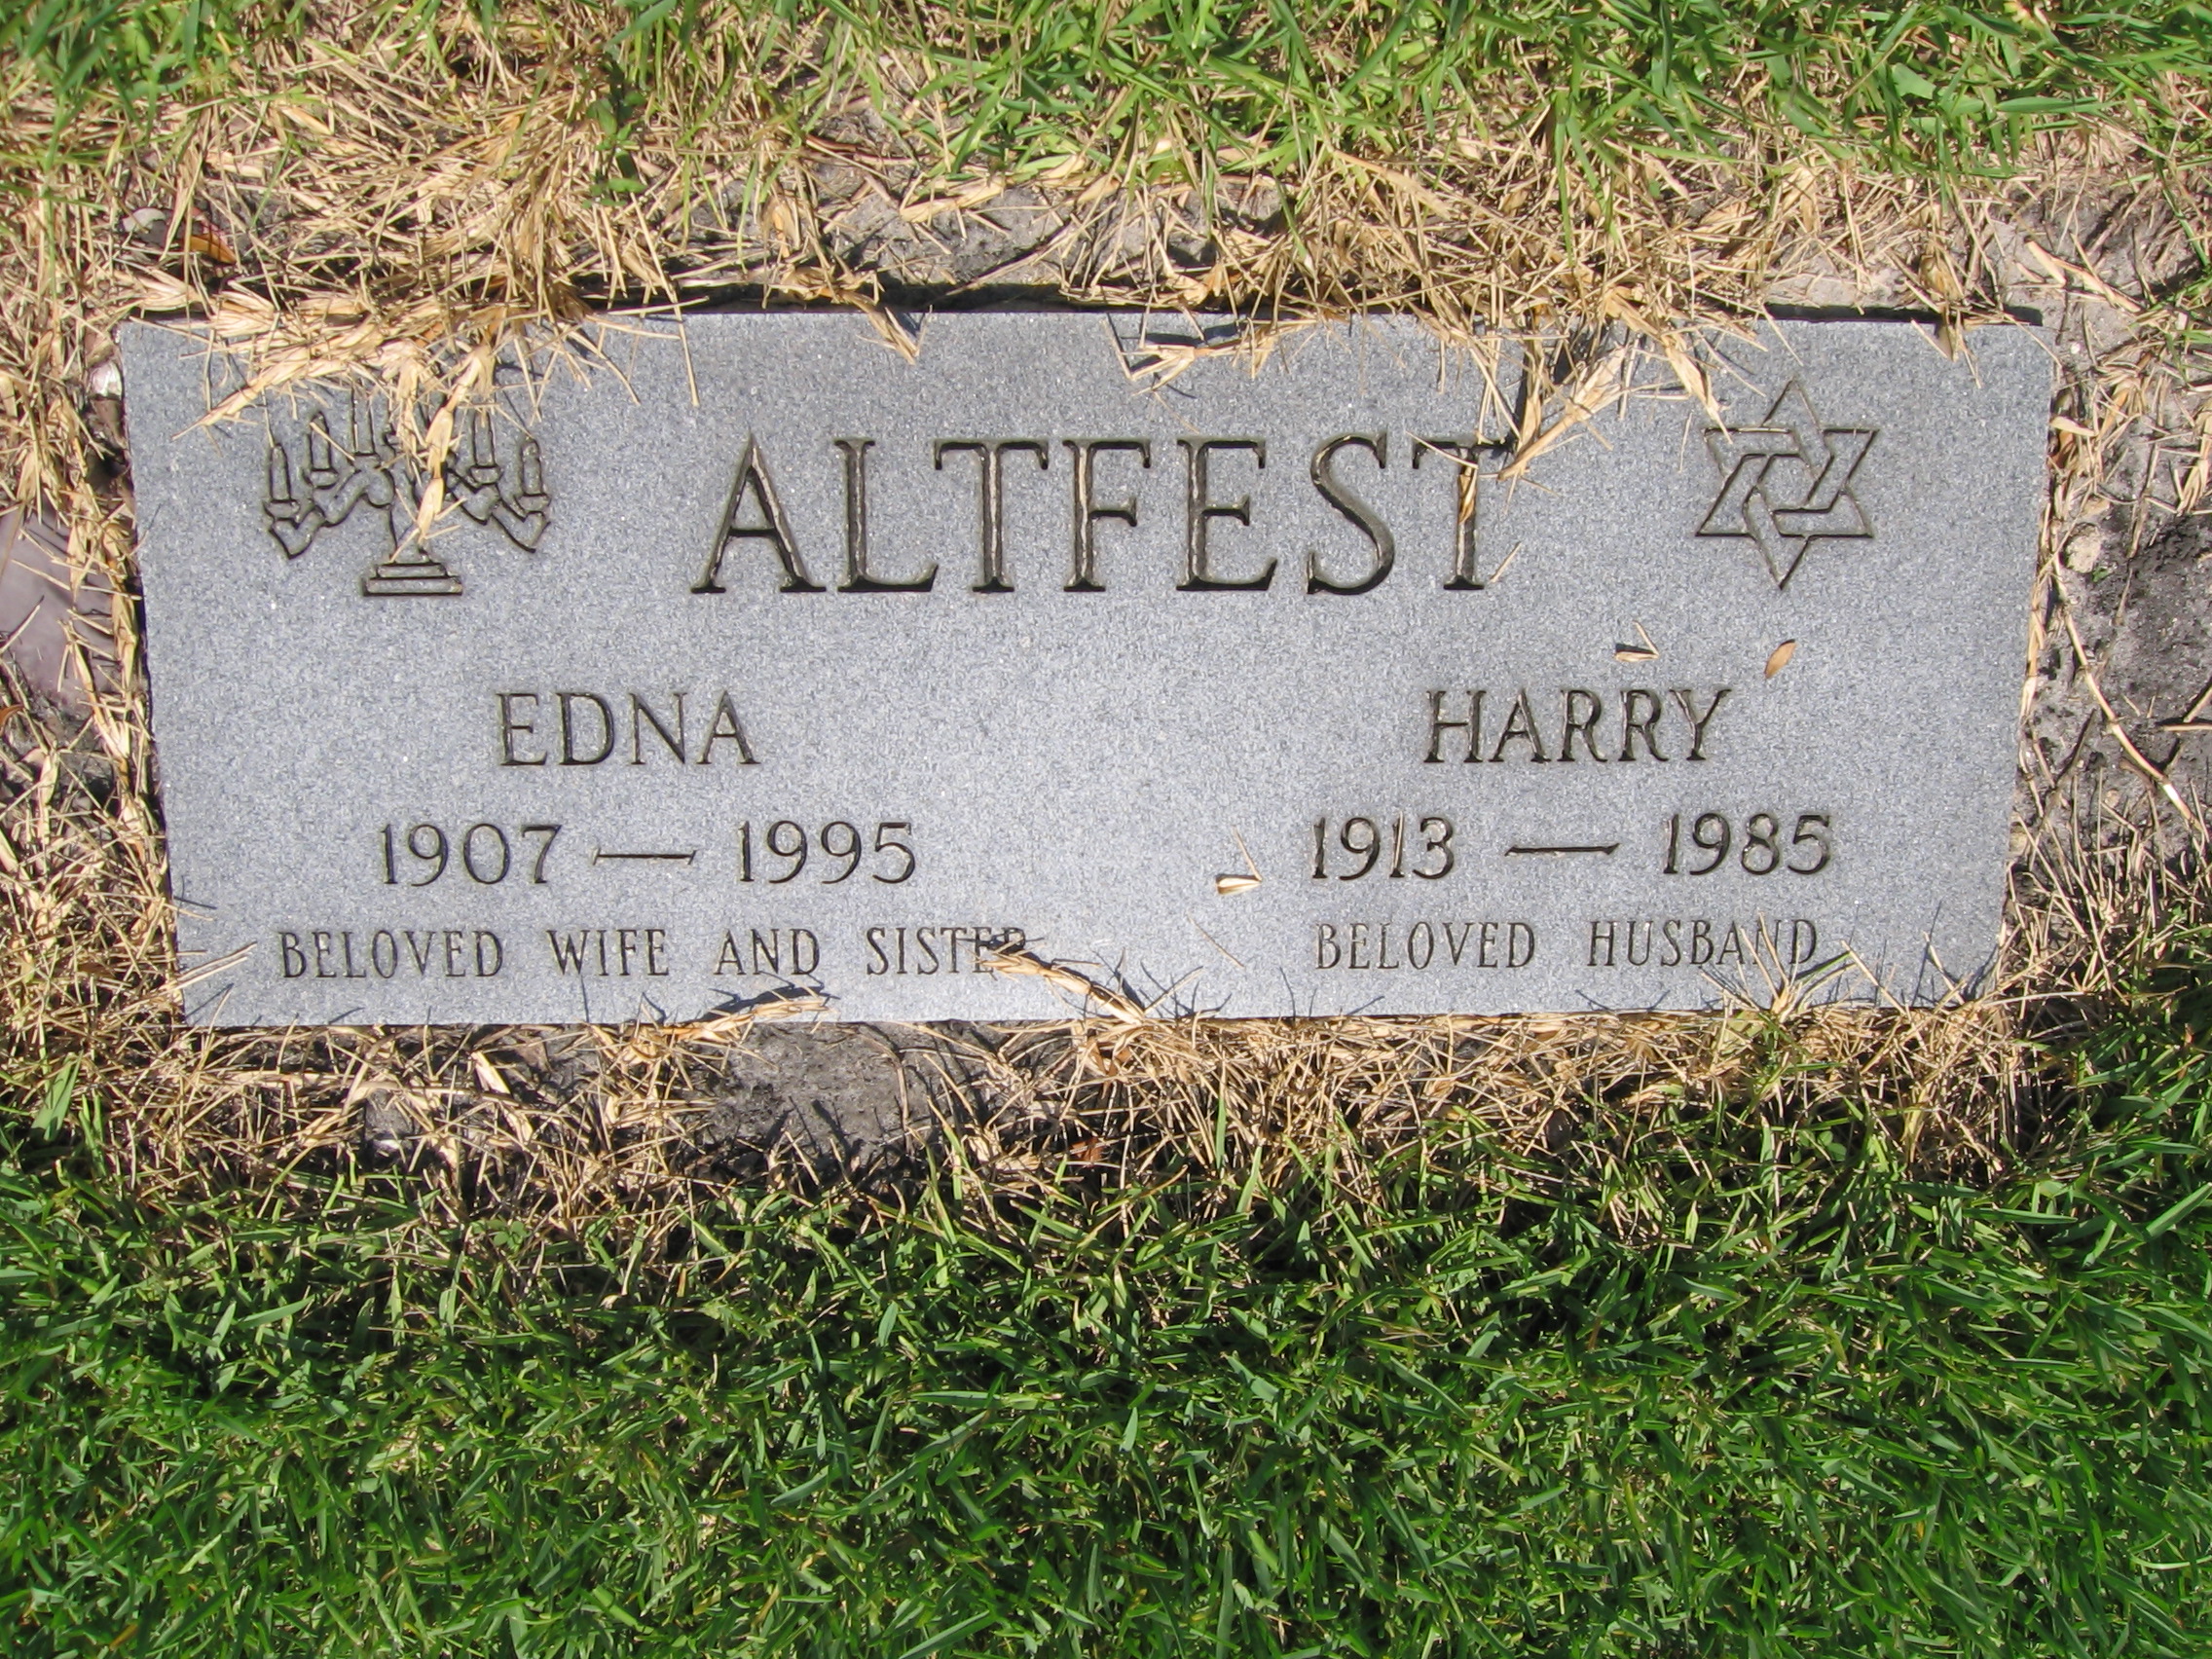 Harry Altfest